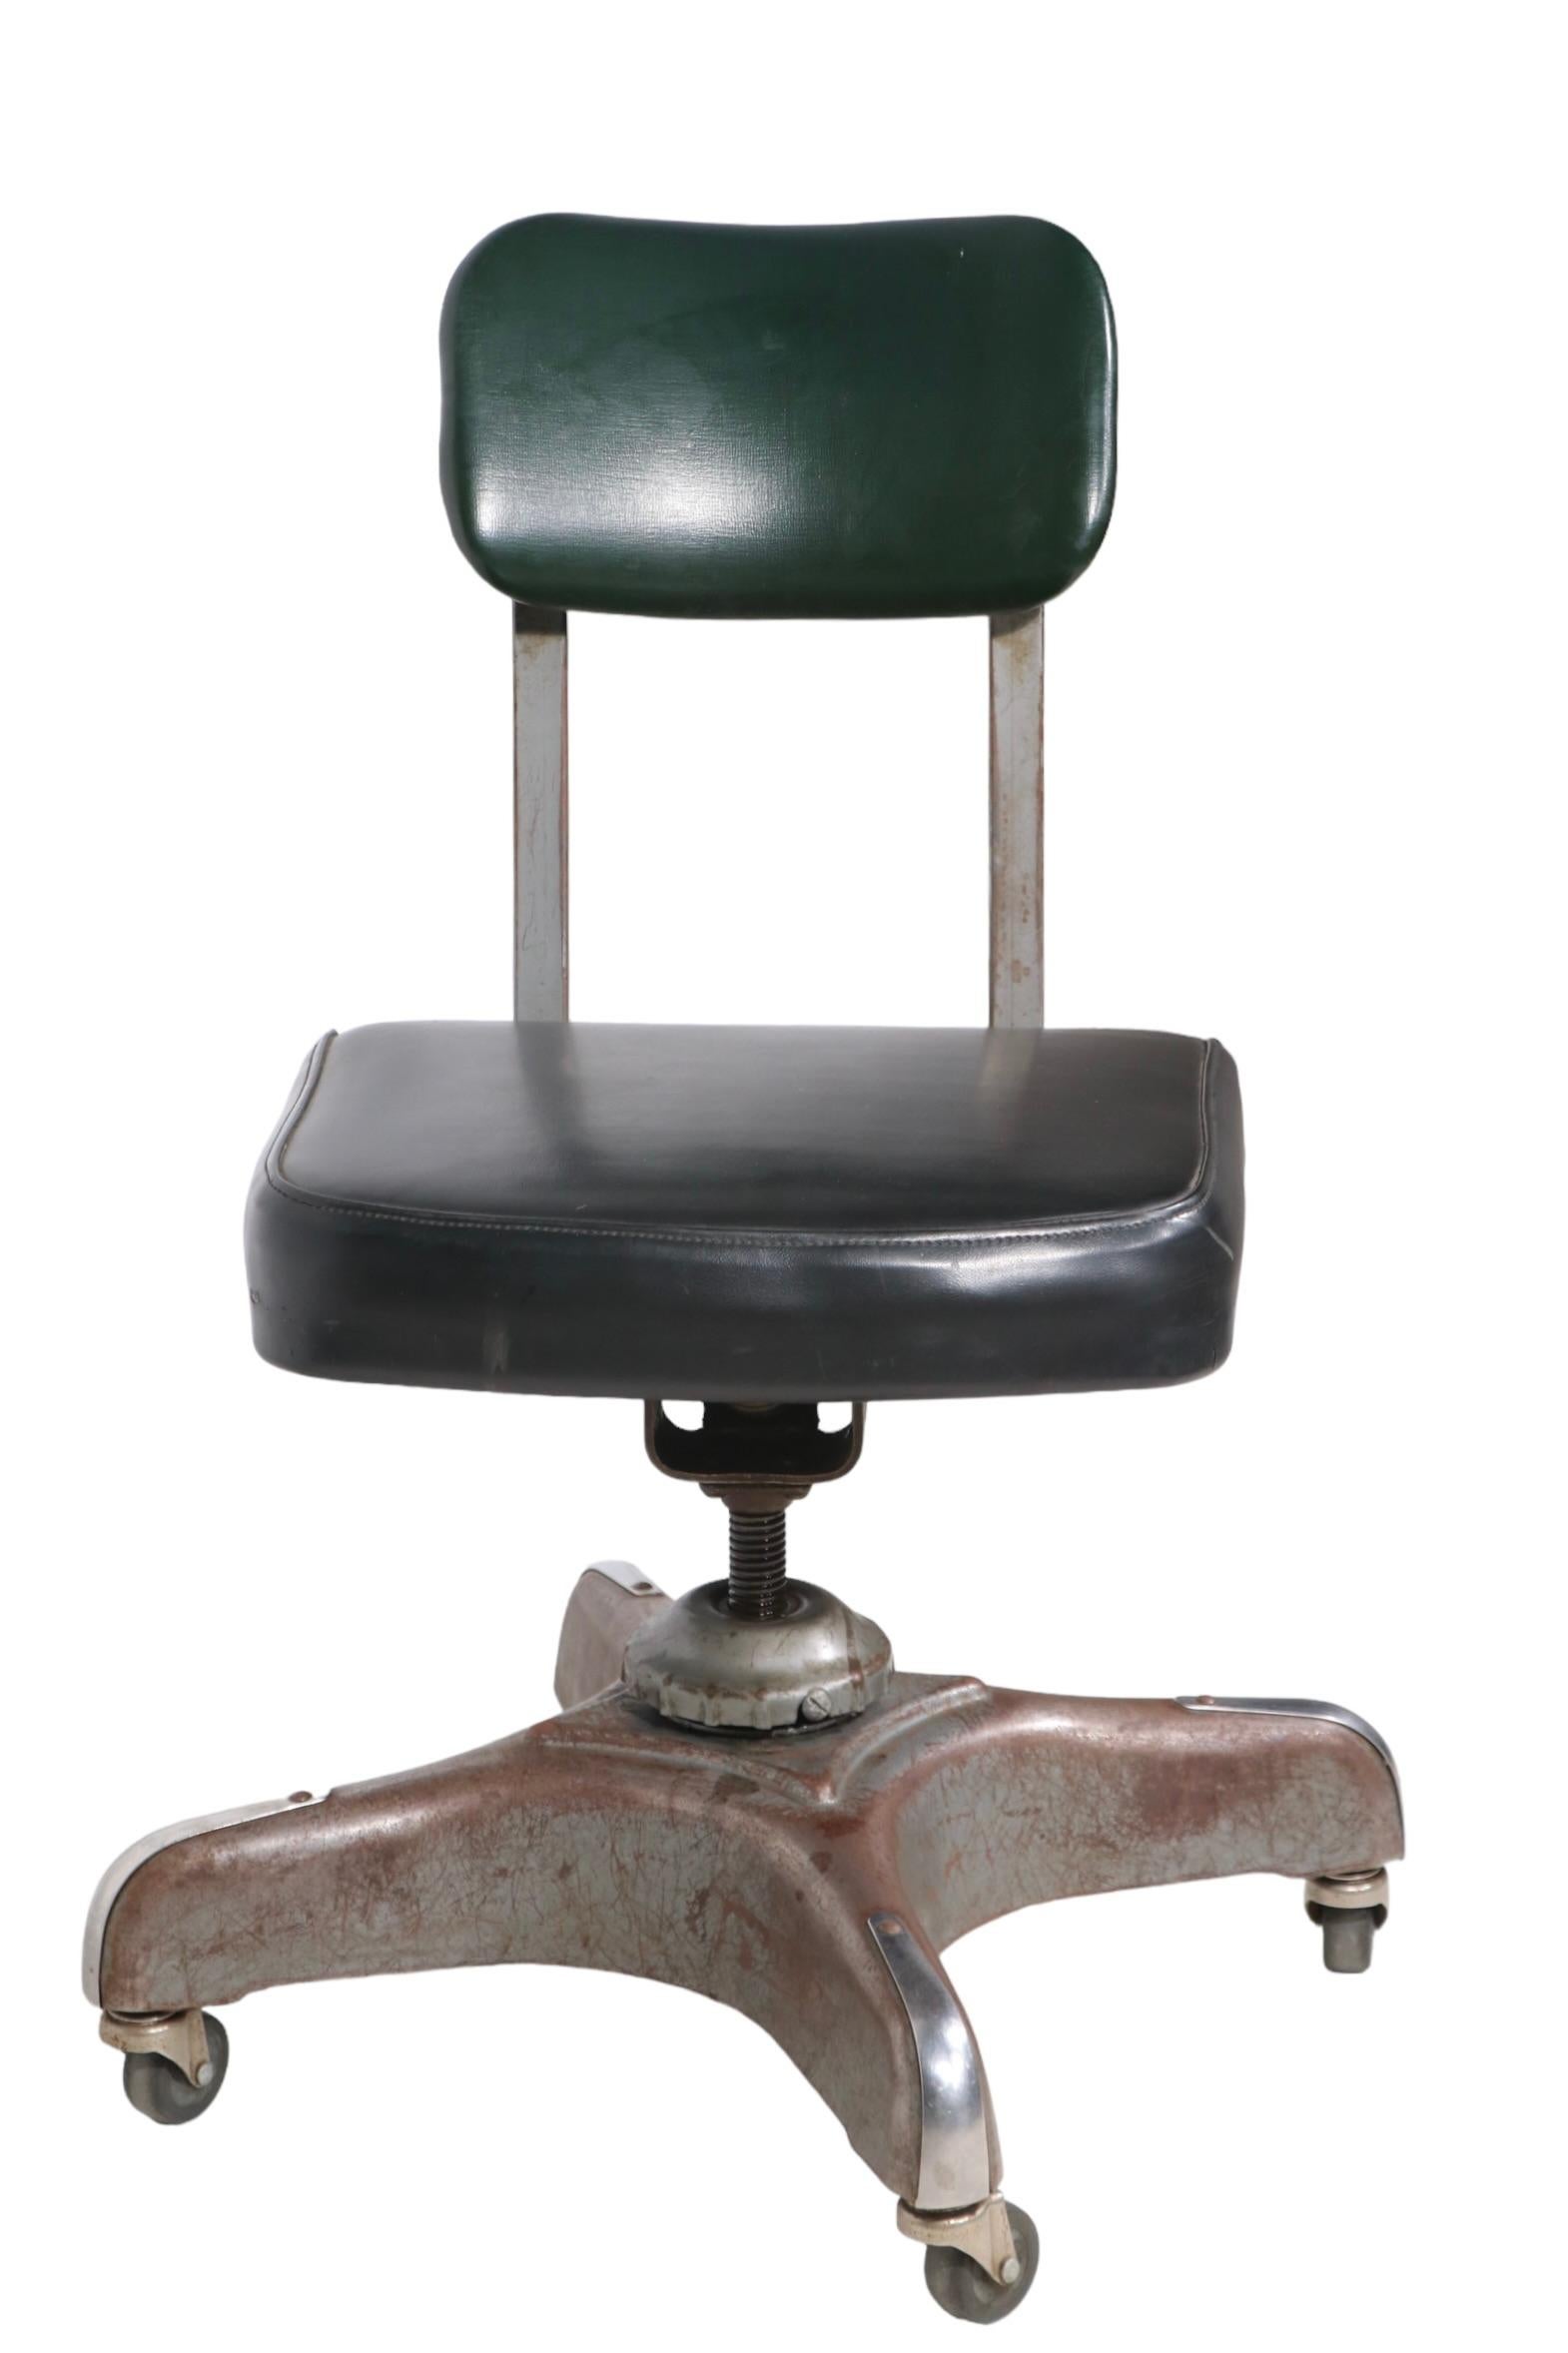 Art Deco Industrial Swivel Tilt Armless Desk Chair by Harter Corporation 1930/40 For Sale 2